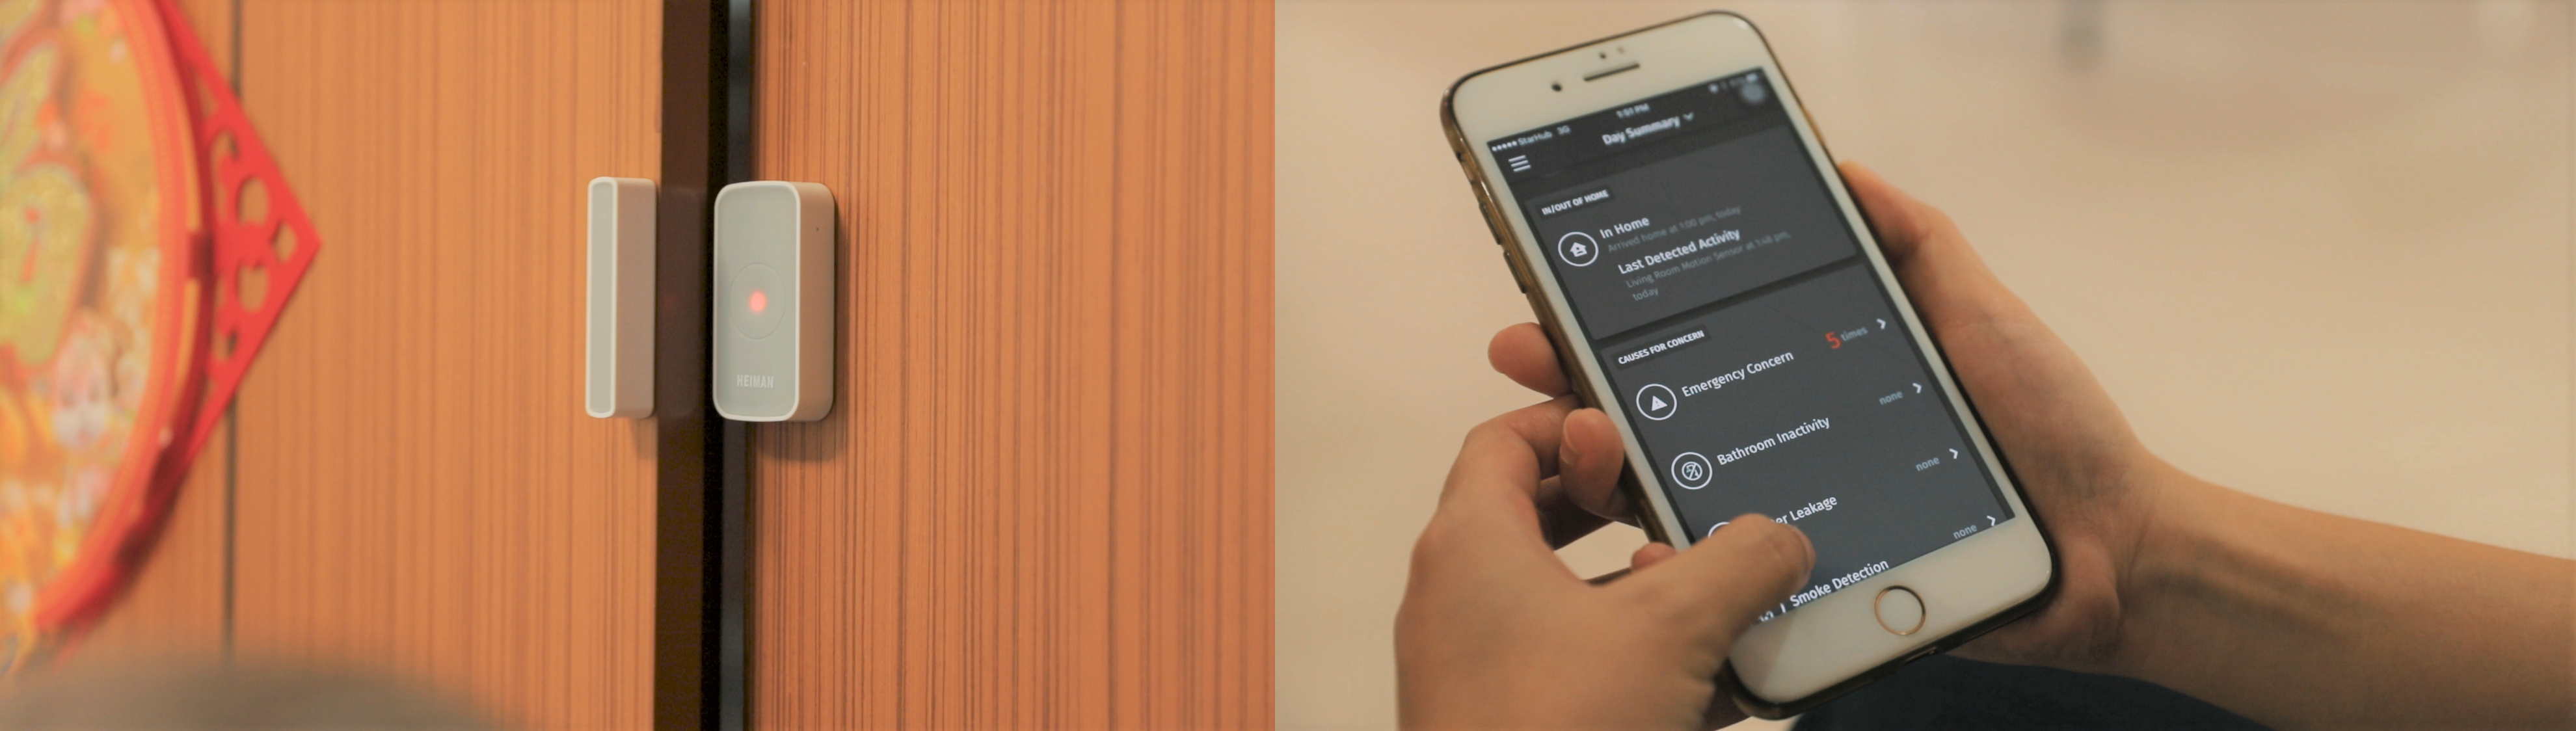 Smart home sensors and mobile app